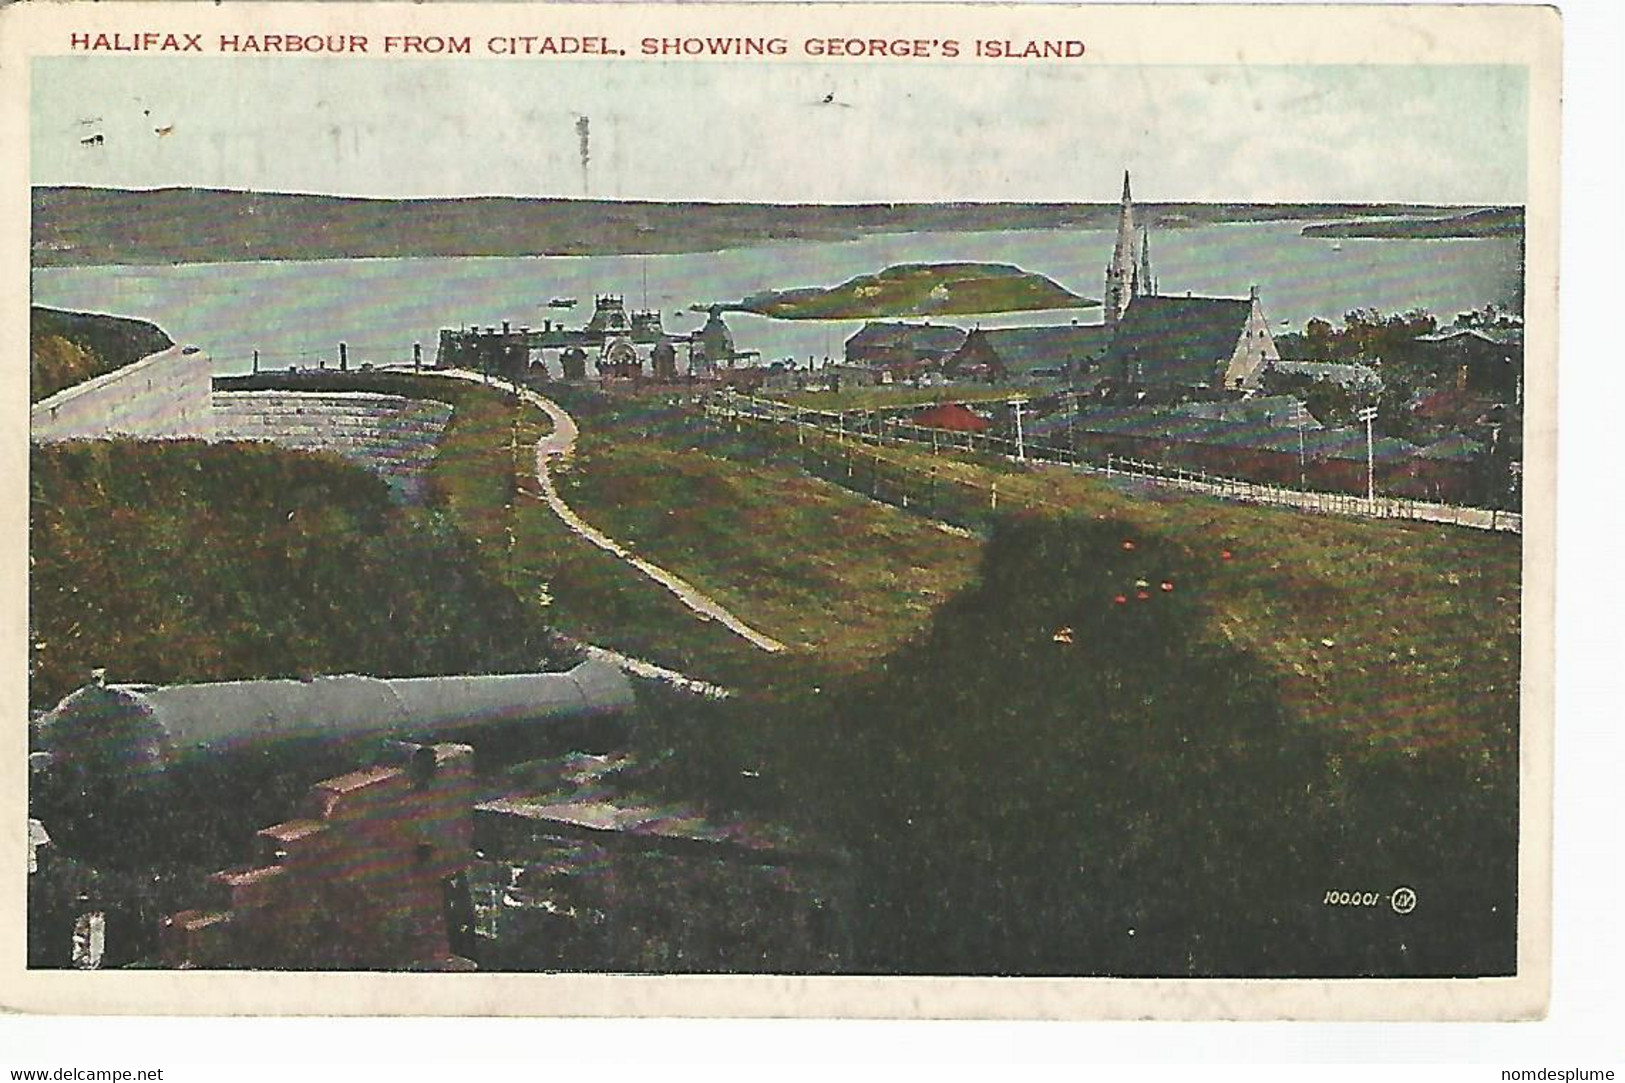 57222) Canada Citadel Halifax Harbour NS Censor Postmark Cancel 1942 - Halifax